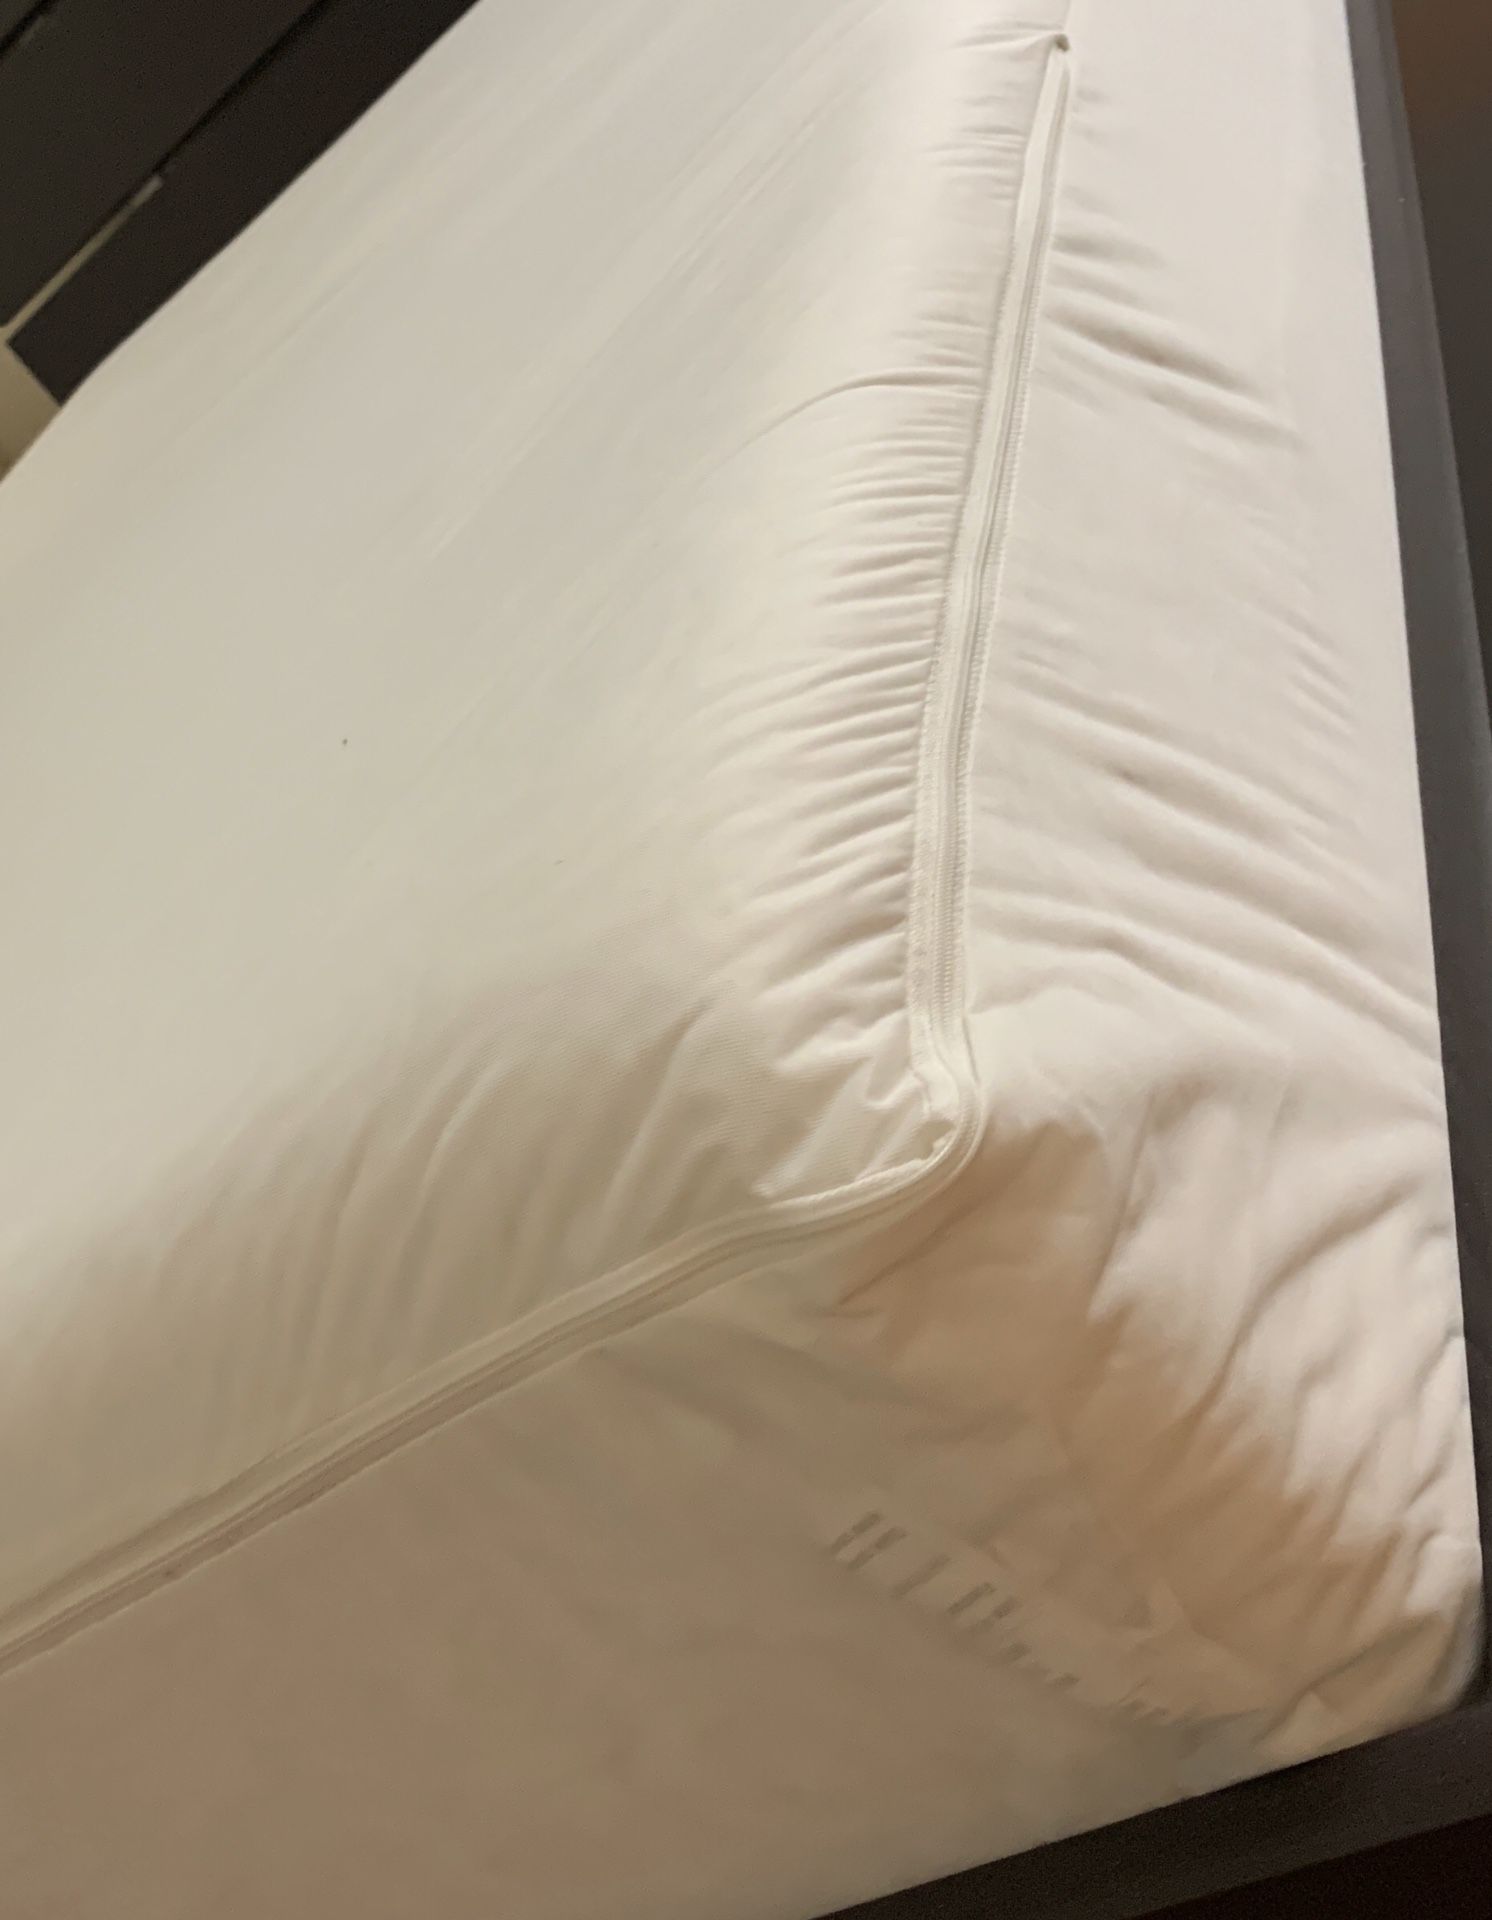 Full size mattress only. No bedframe